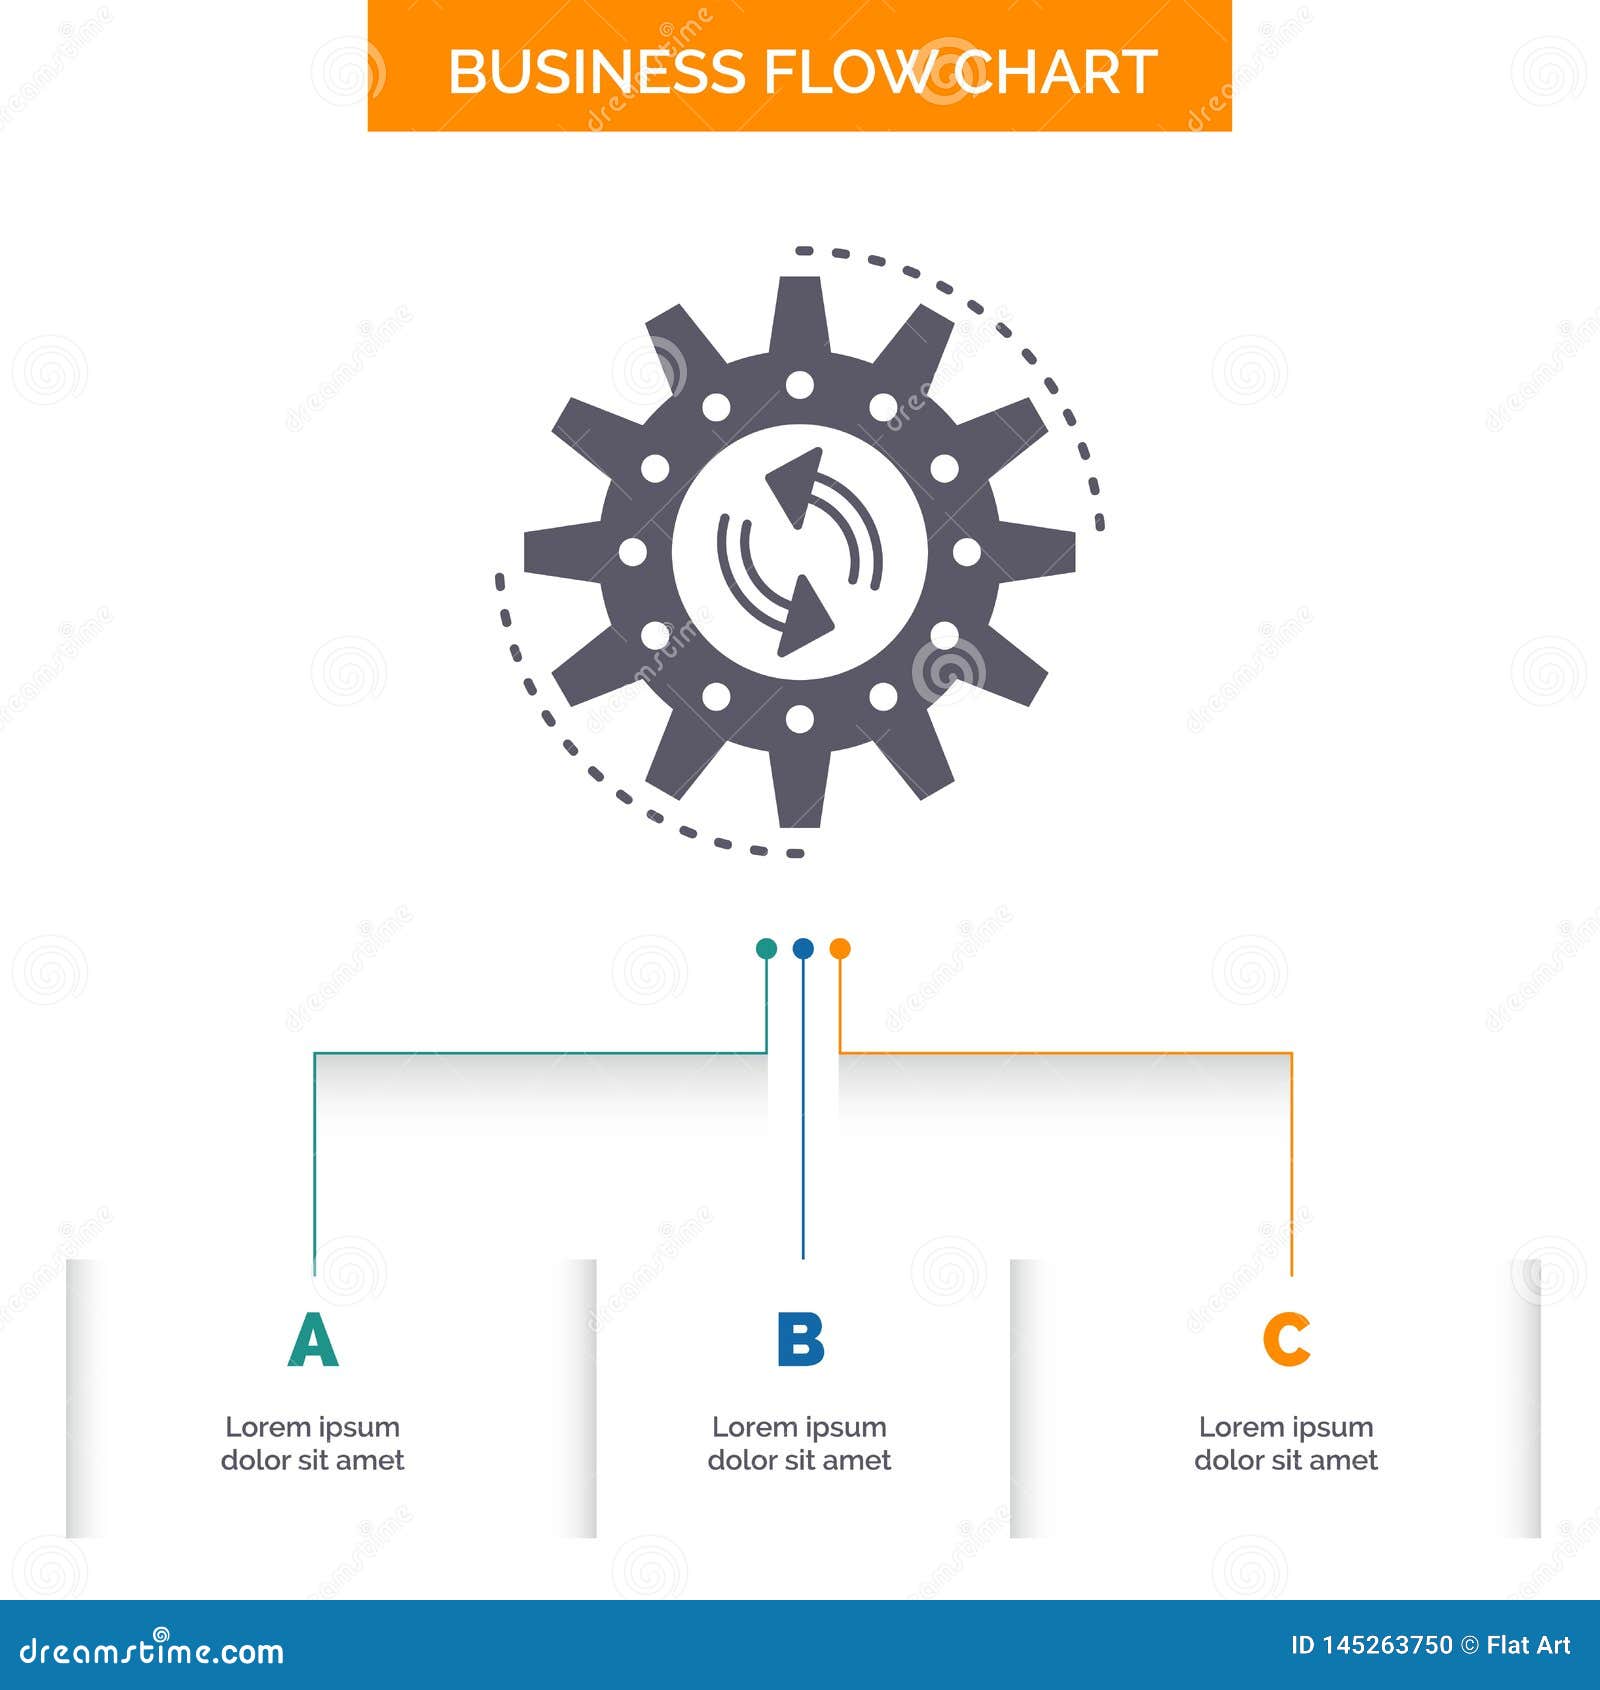 Business Flow Chart Template